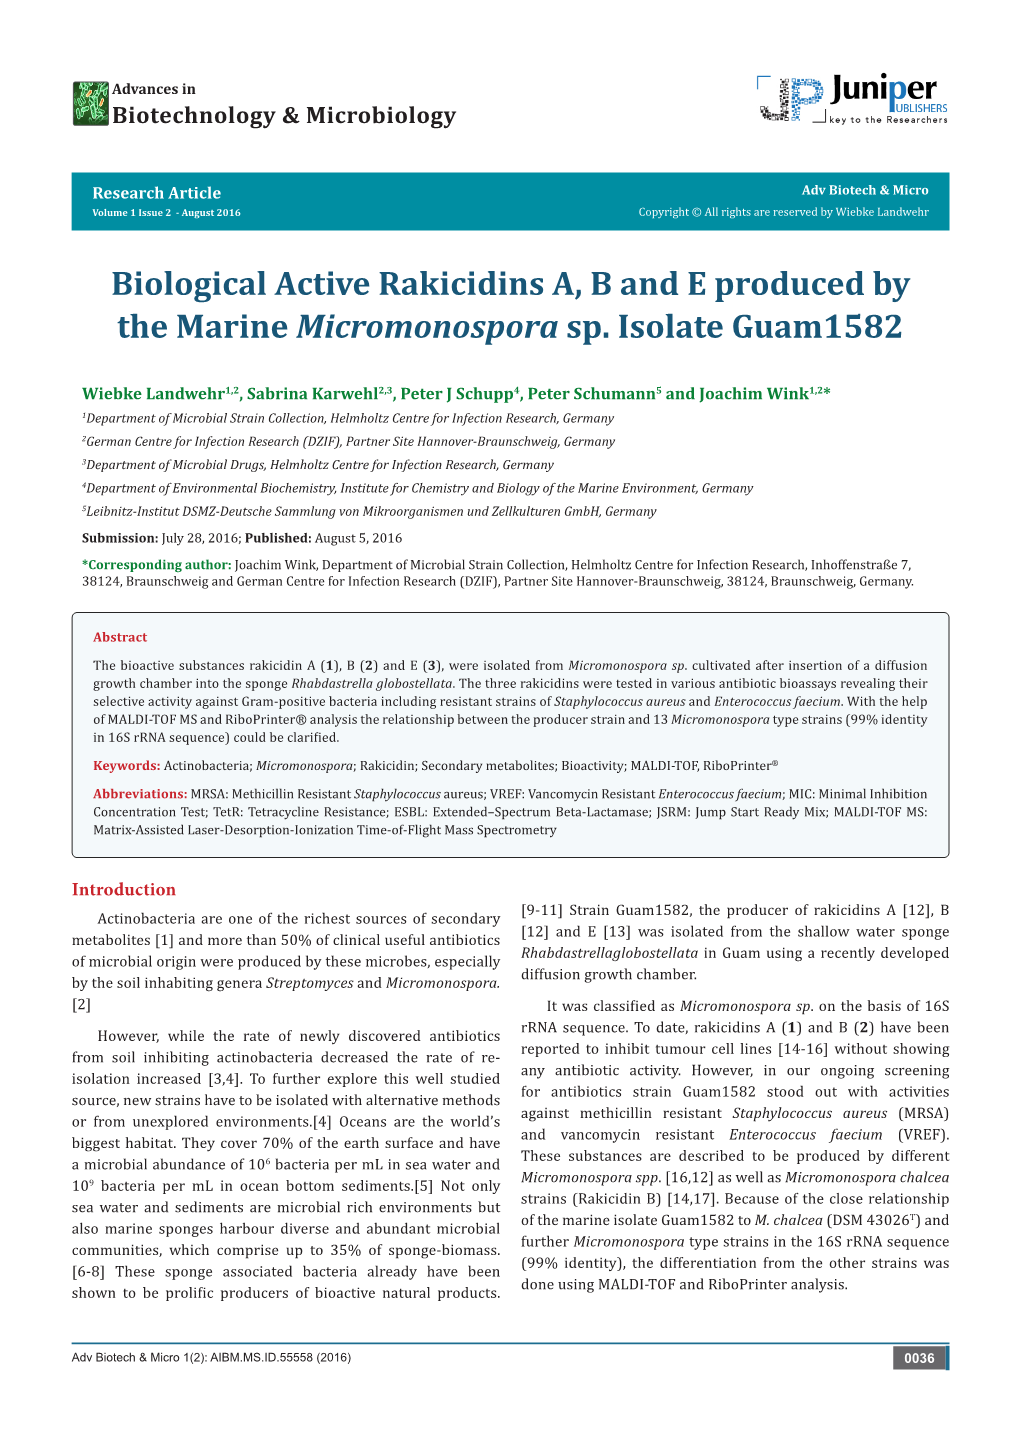 Biological Active Rakicidins A, B and E Produced by the Marine Micromonospora Sp